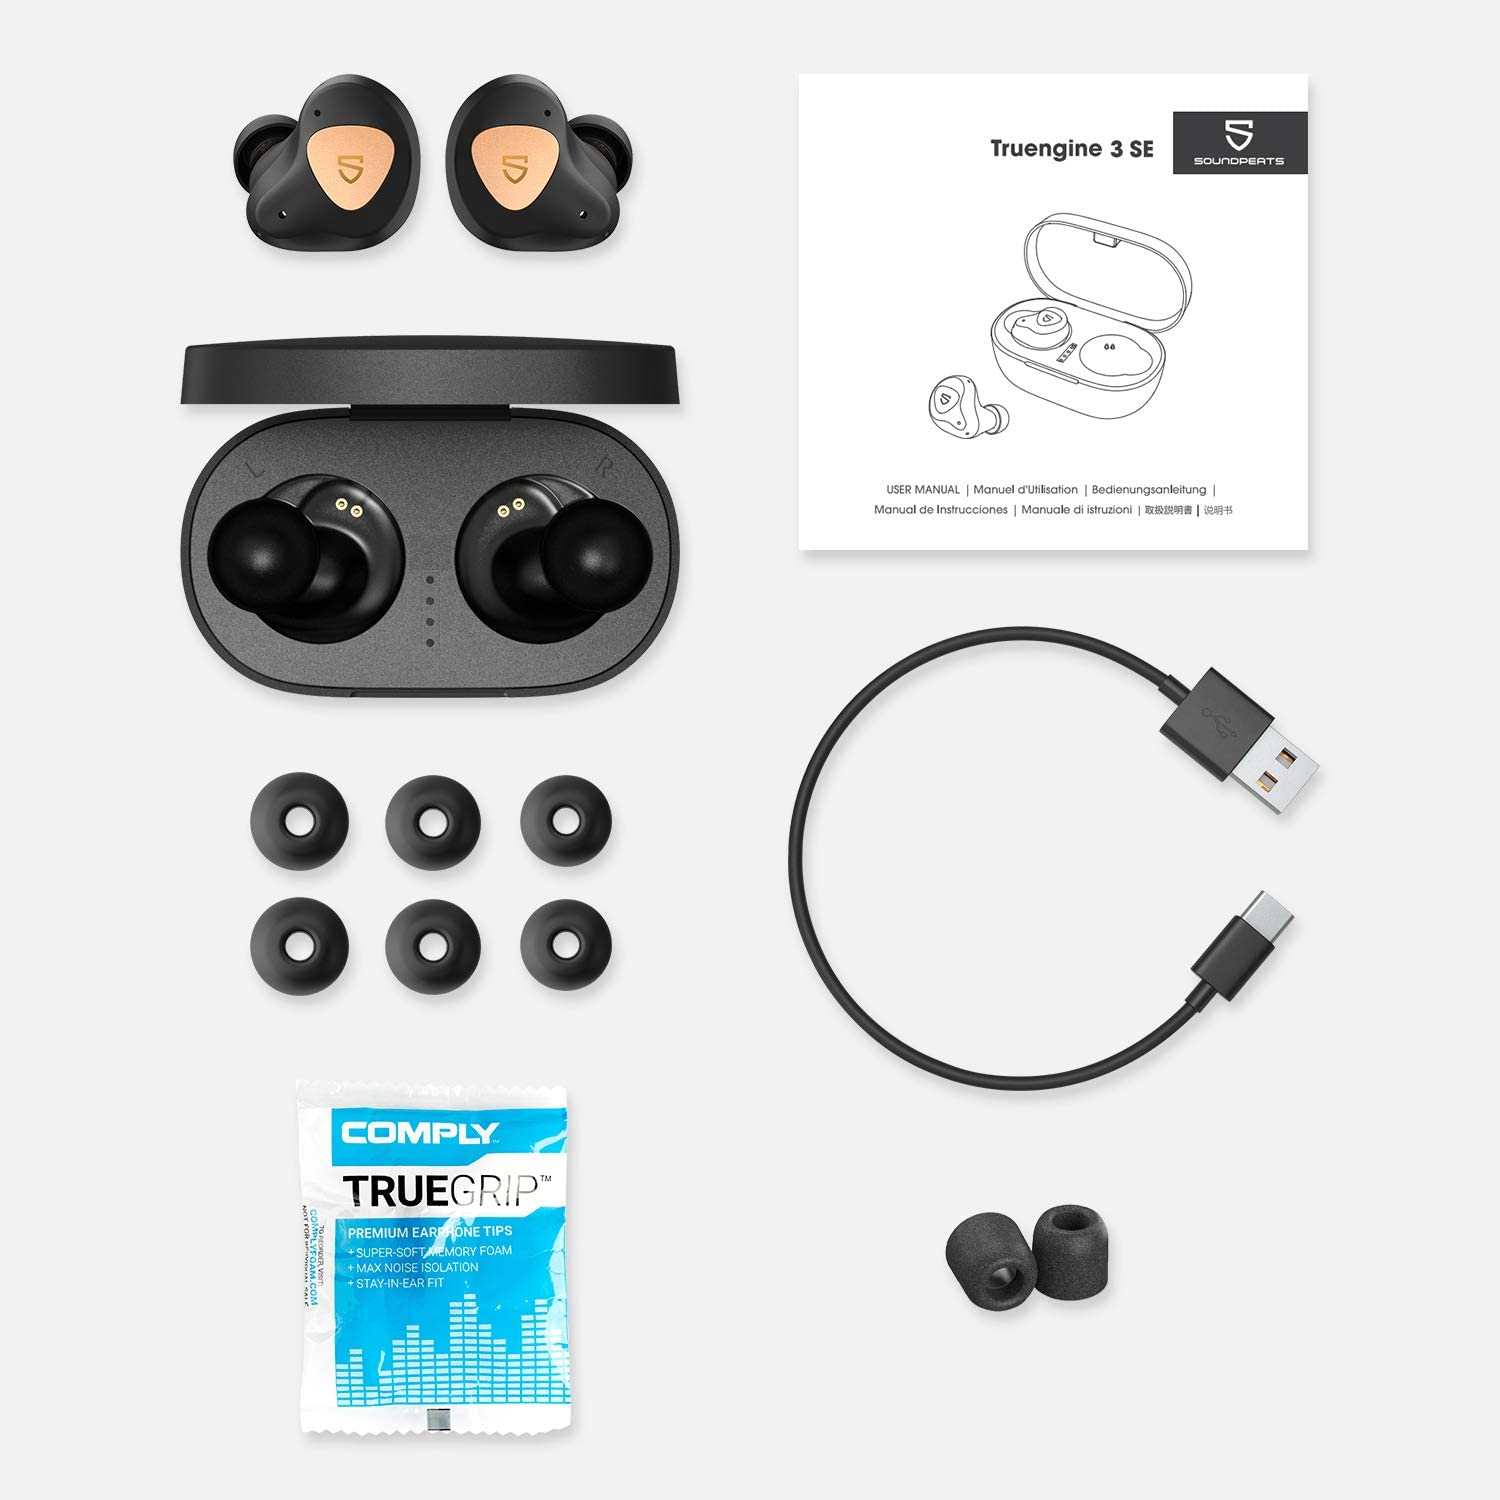 SoundPeats Truengine 3 SE TWS 4Mics, Dual Driver, Touch, AptX - Black